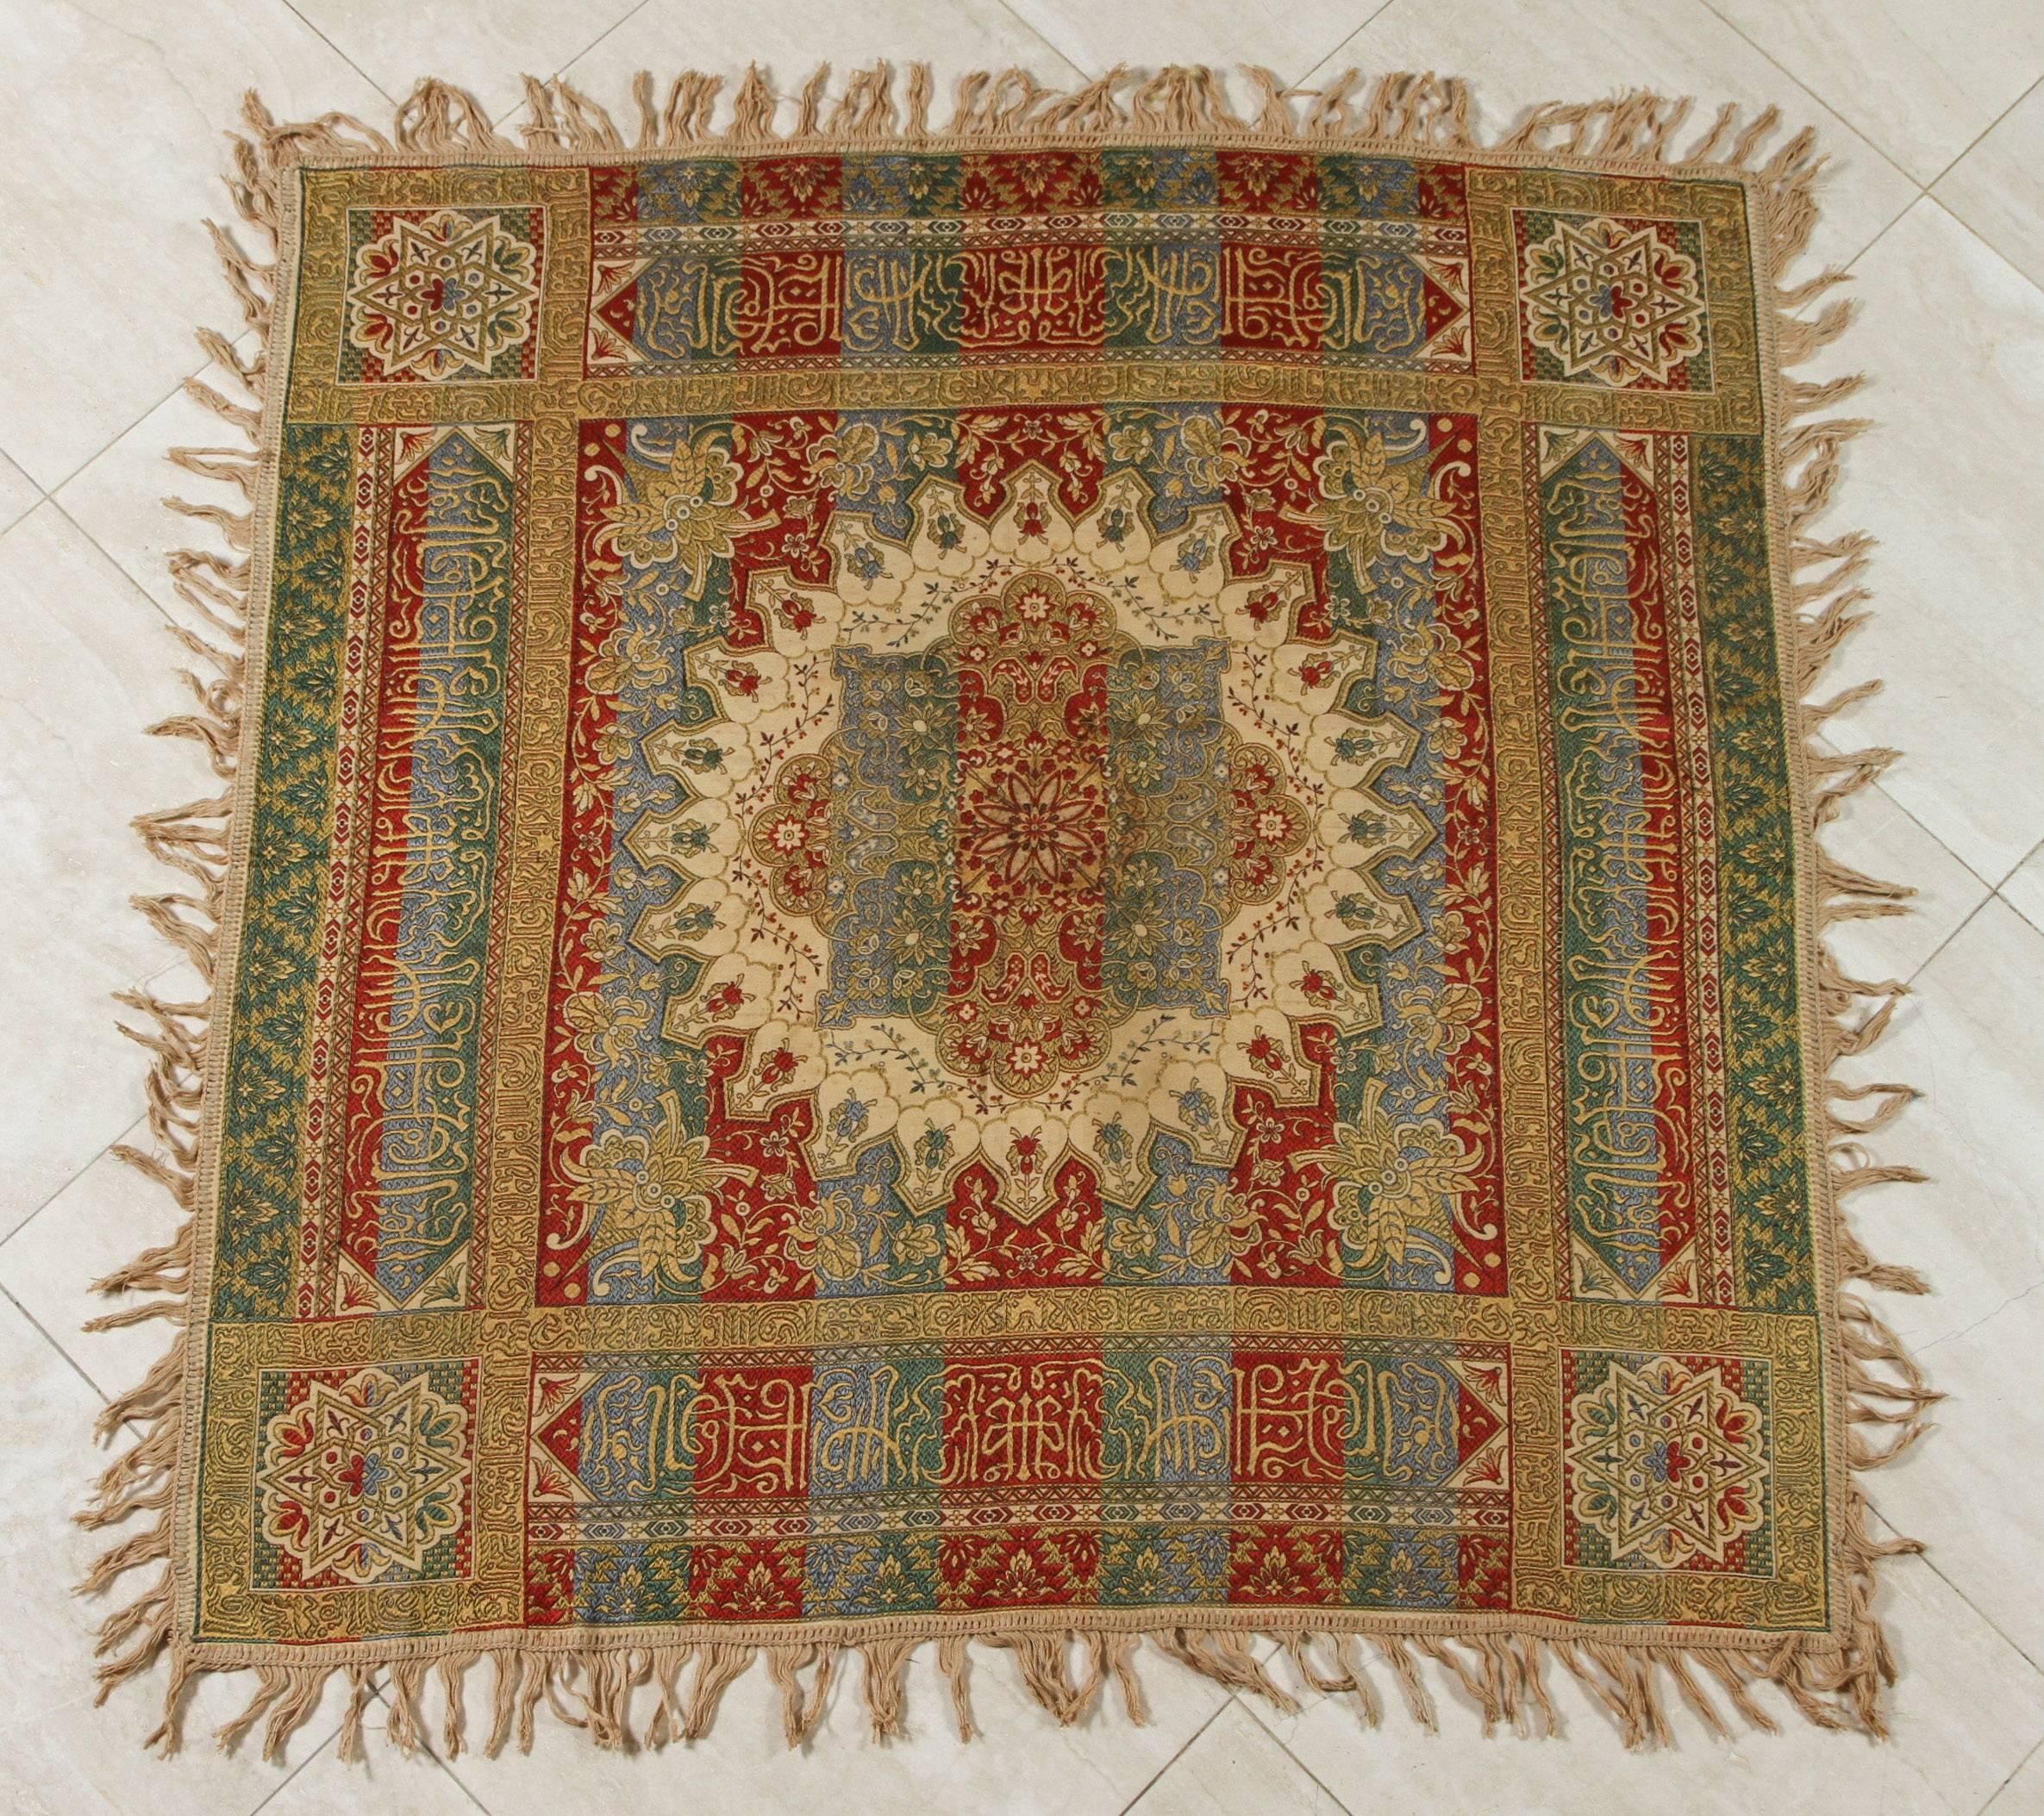 textile in arabic